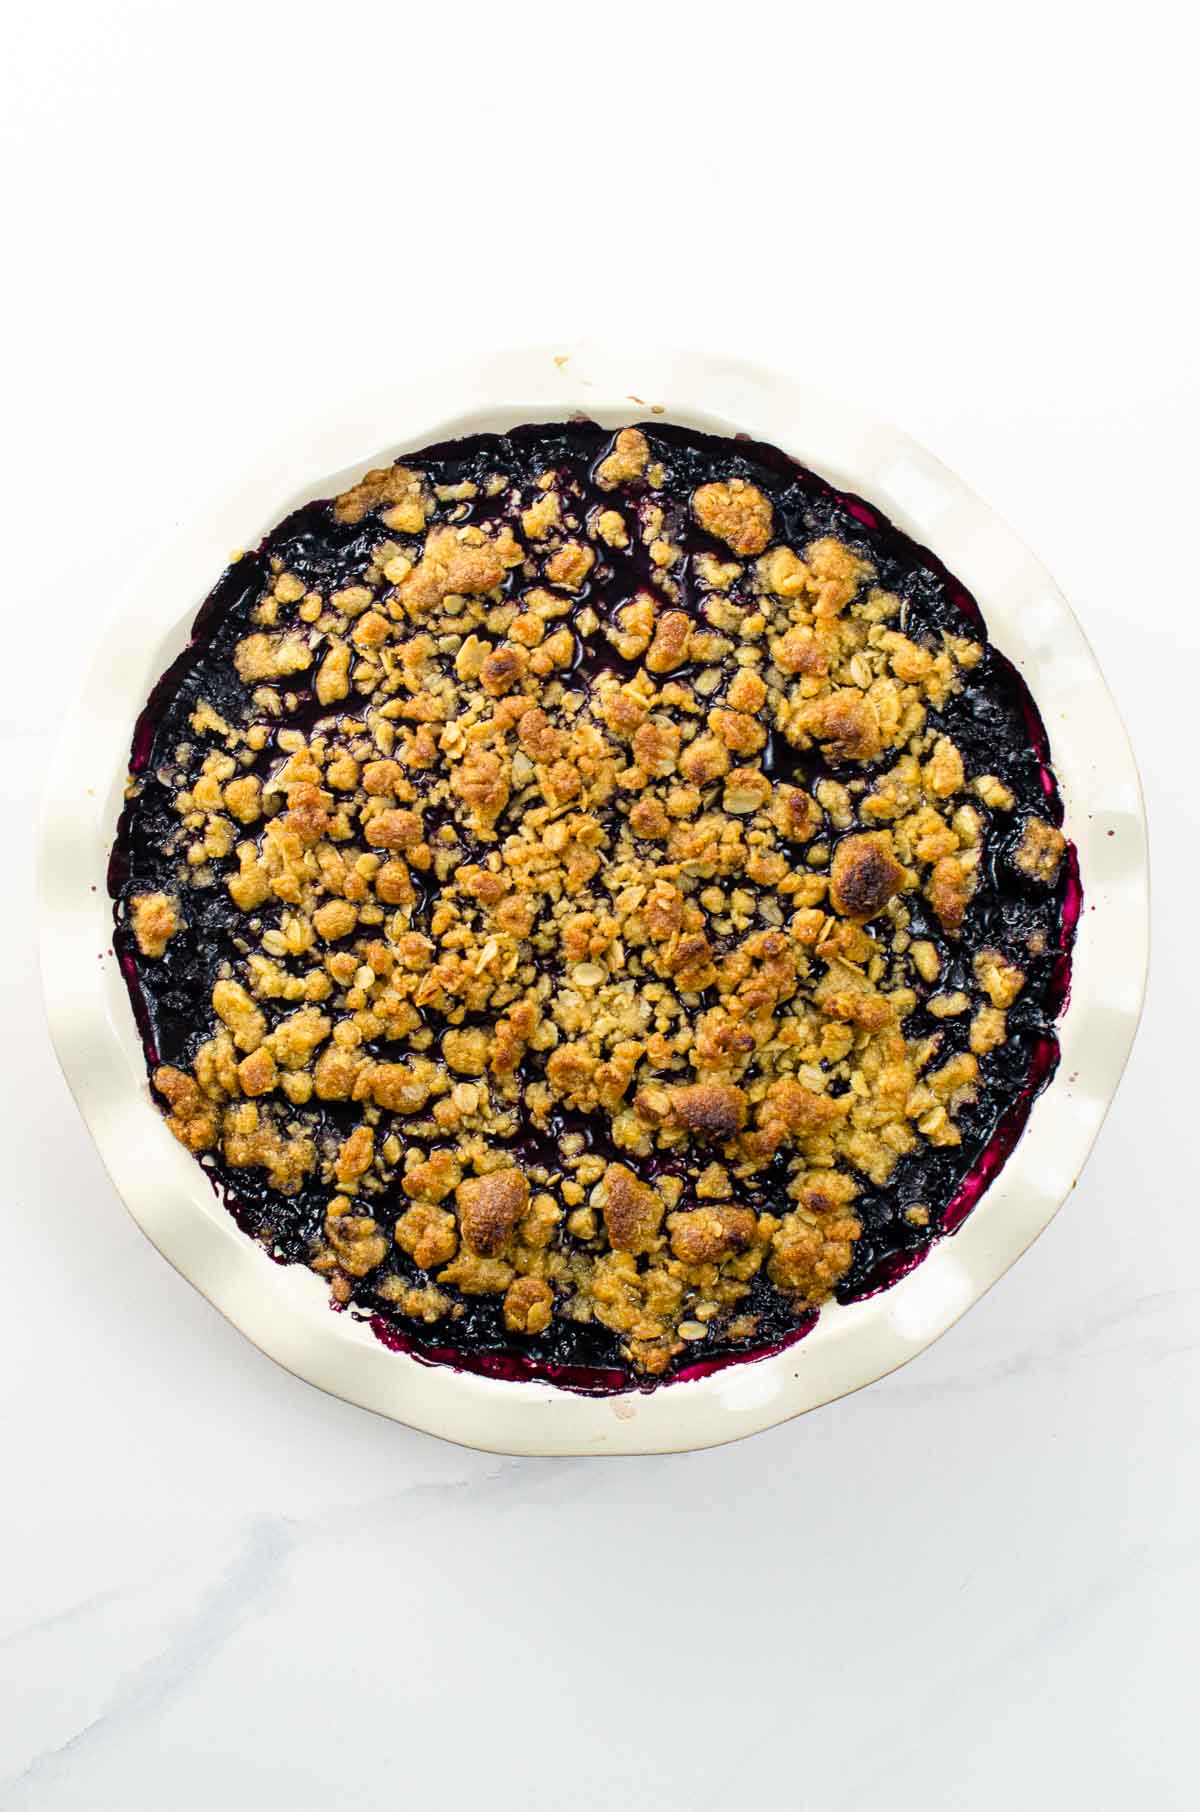 blueberry crisp in a deep dish pie plate